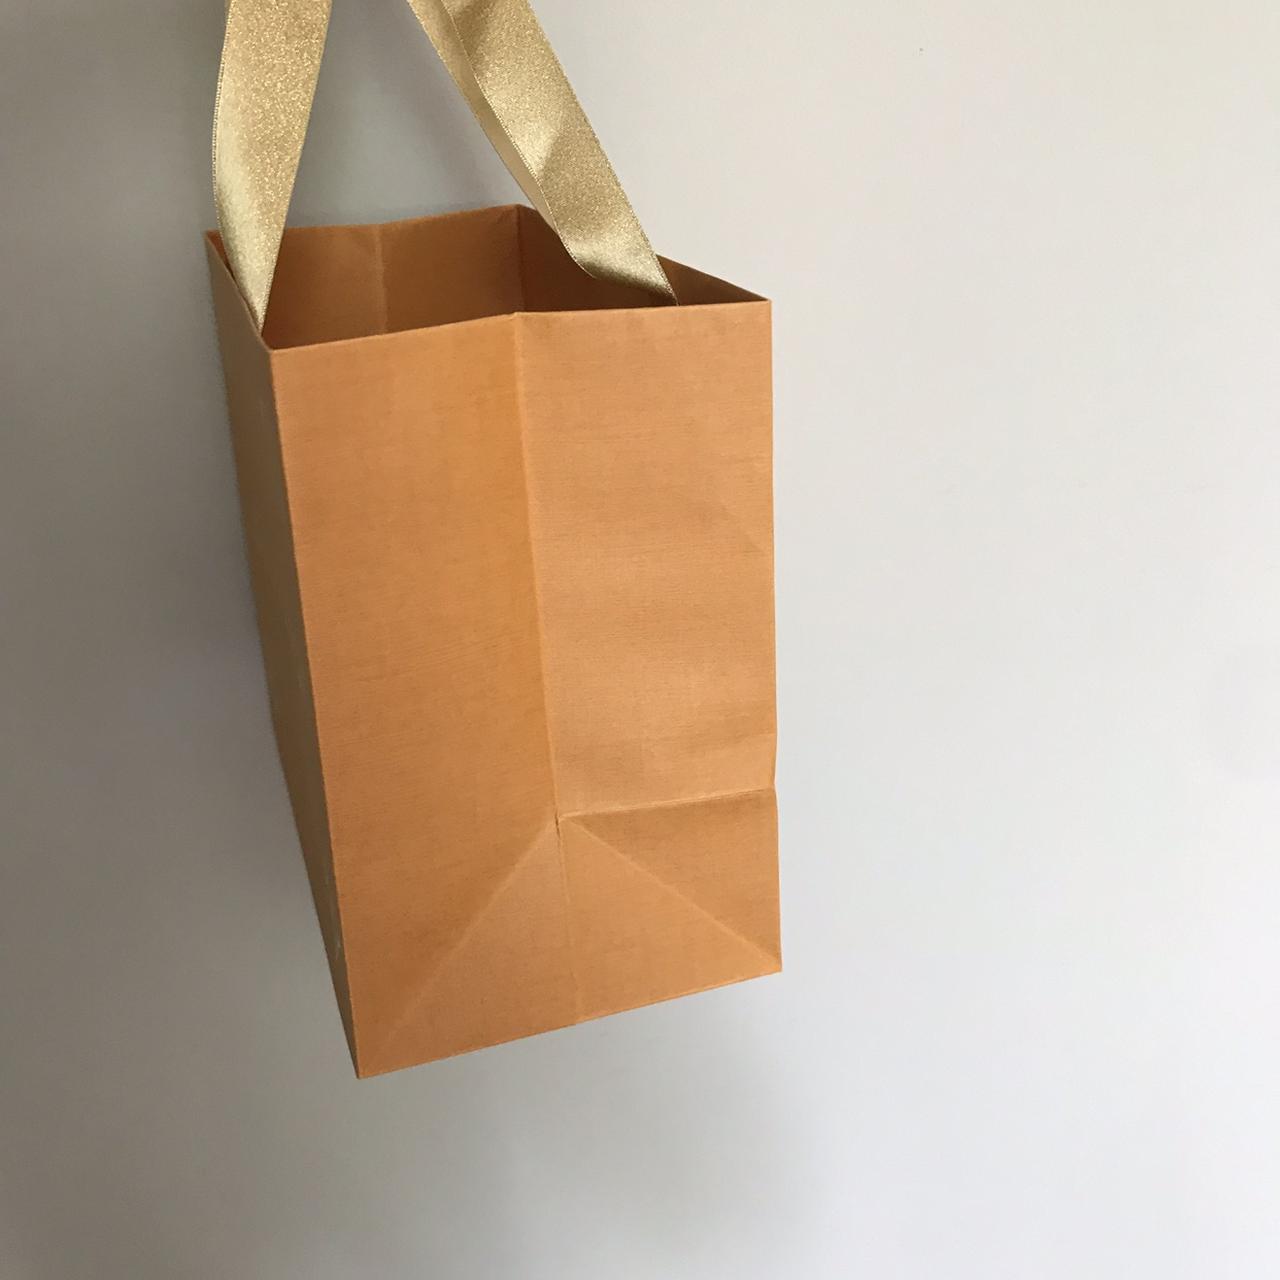 2 shorter and smaller LV shopping bags, 2 taller - Depop